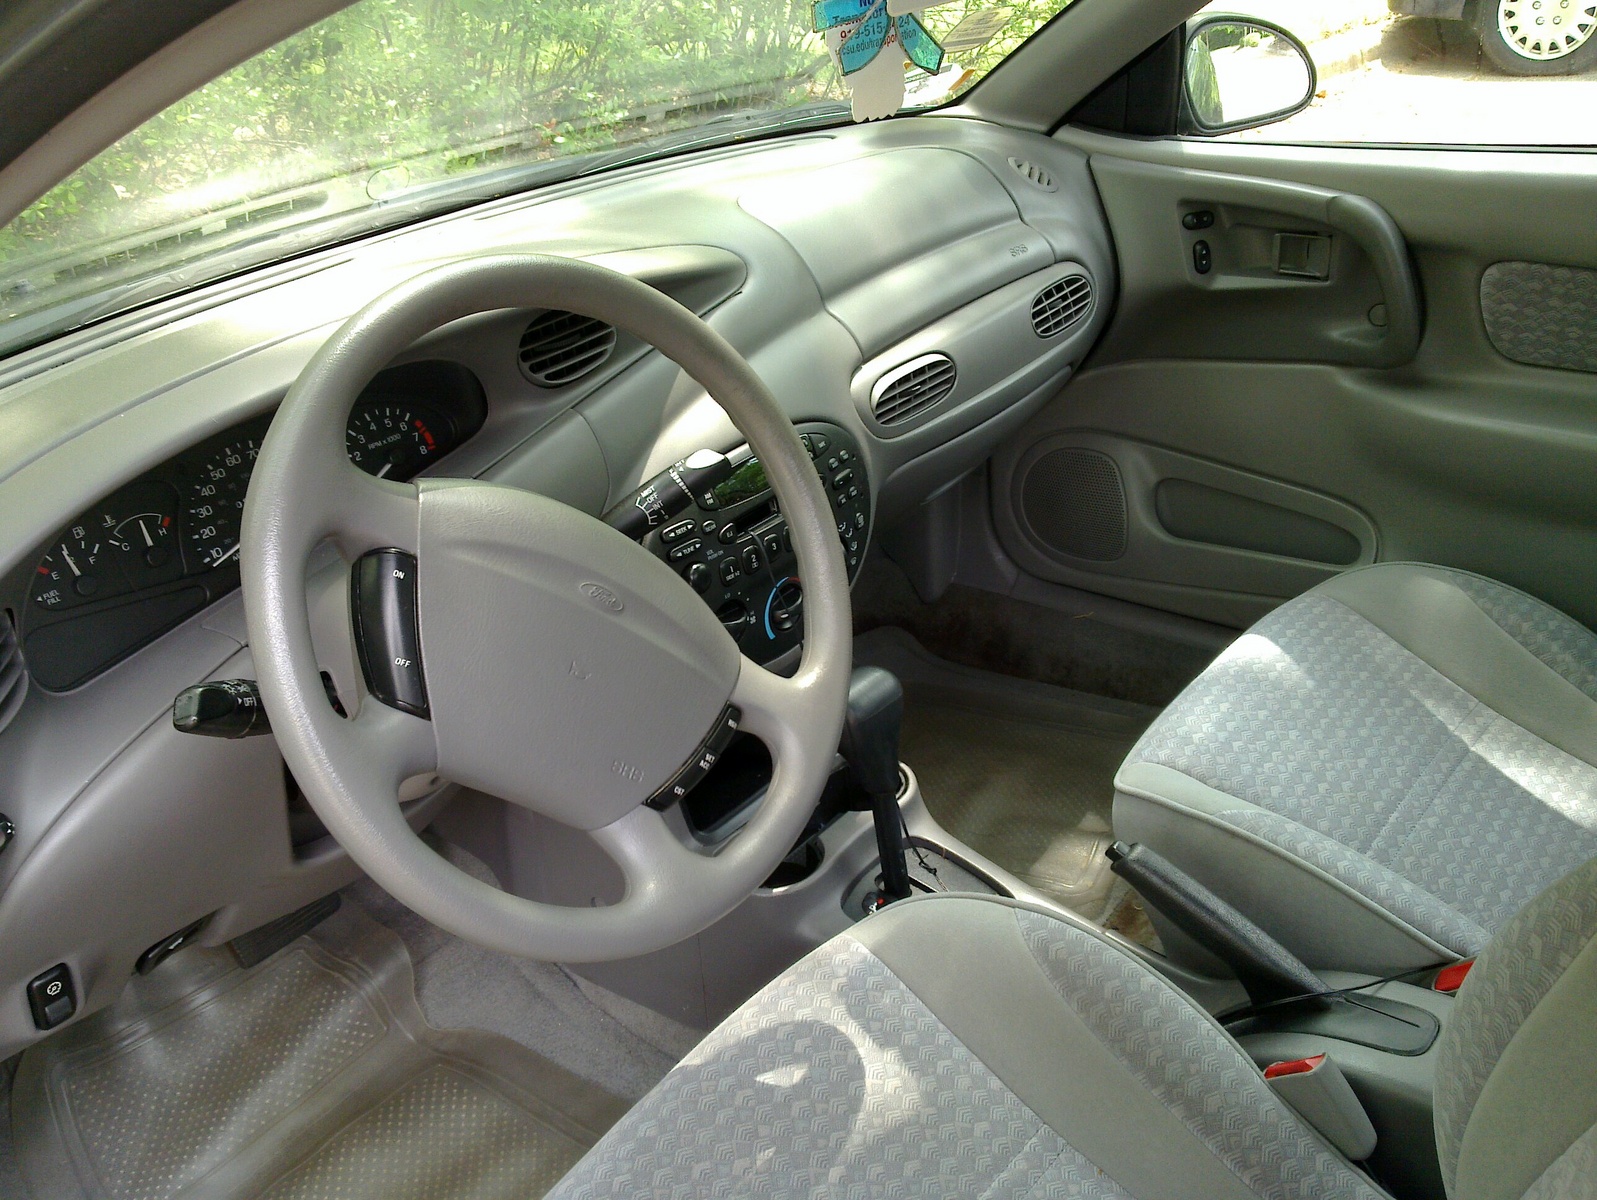 1998 Ford escort interior